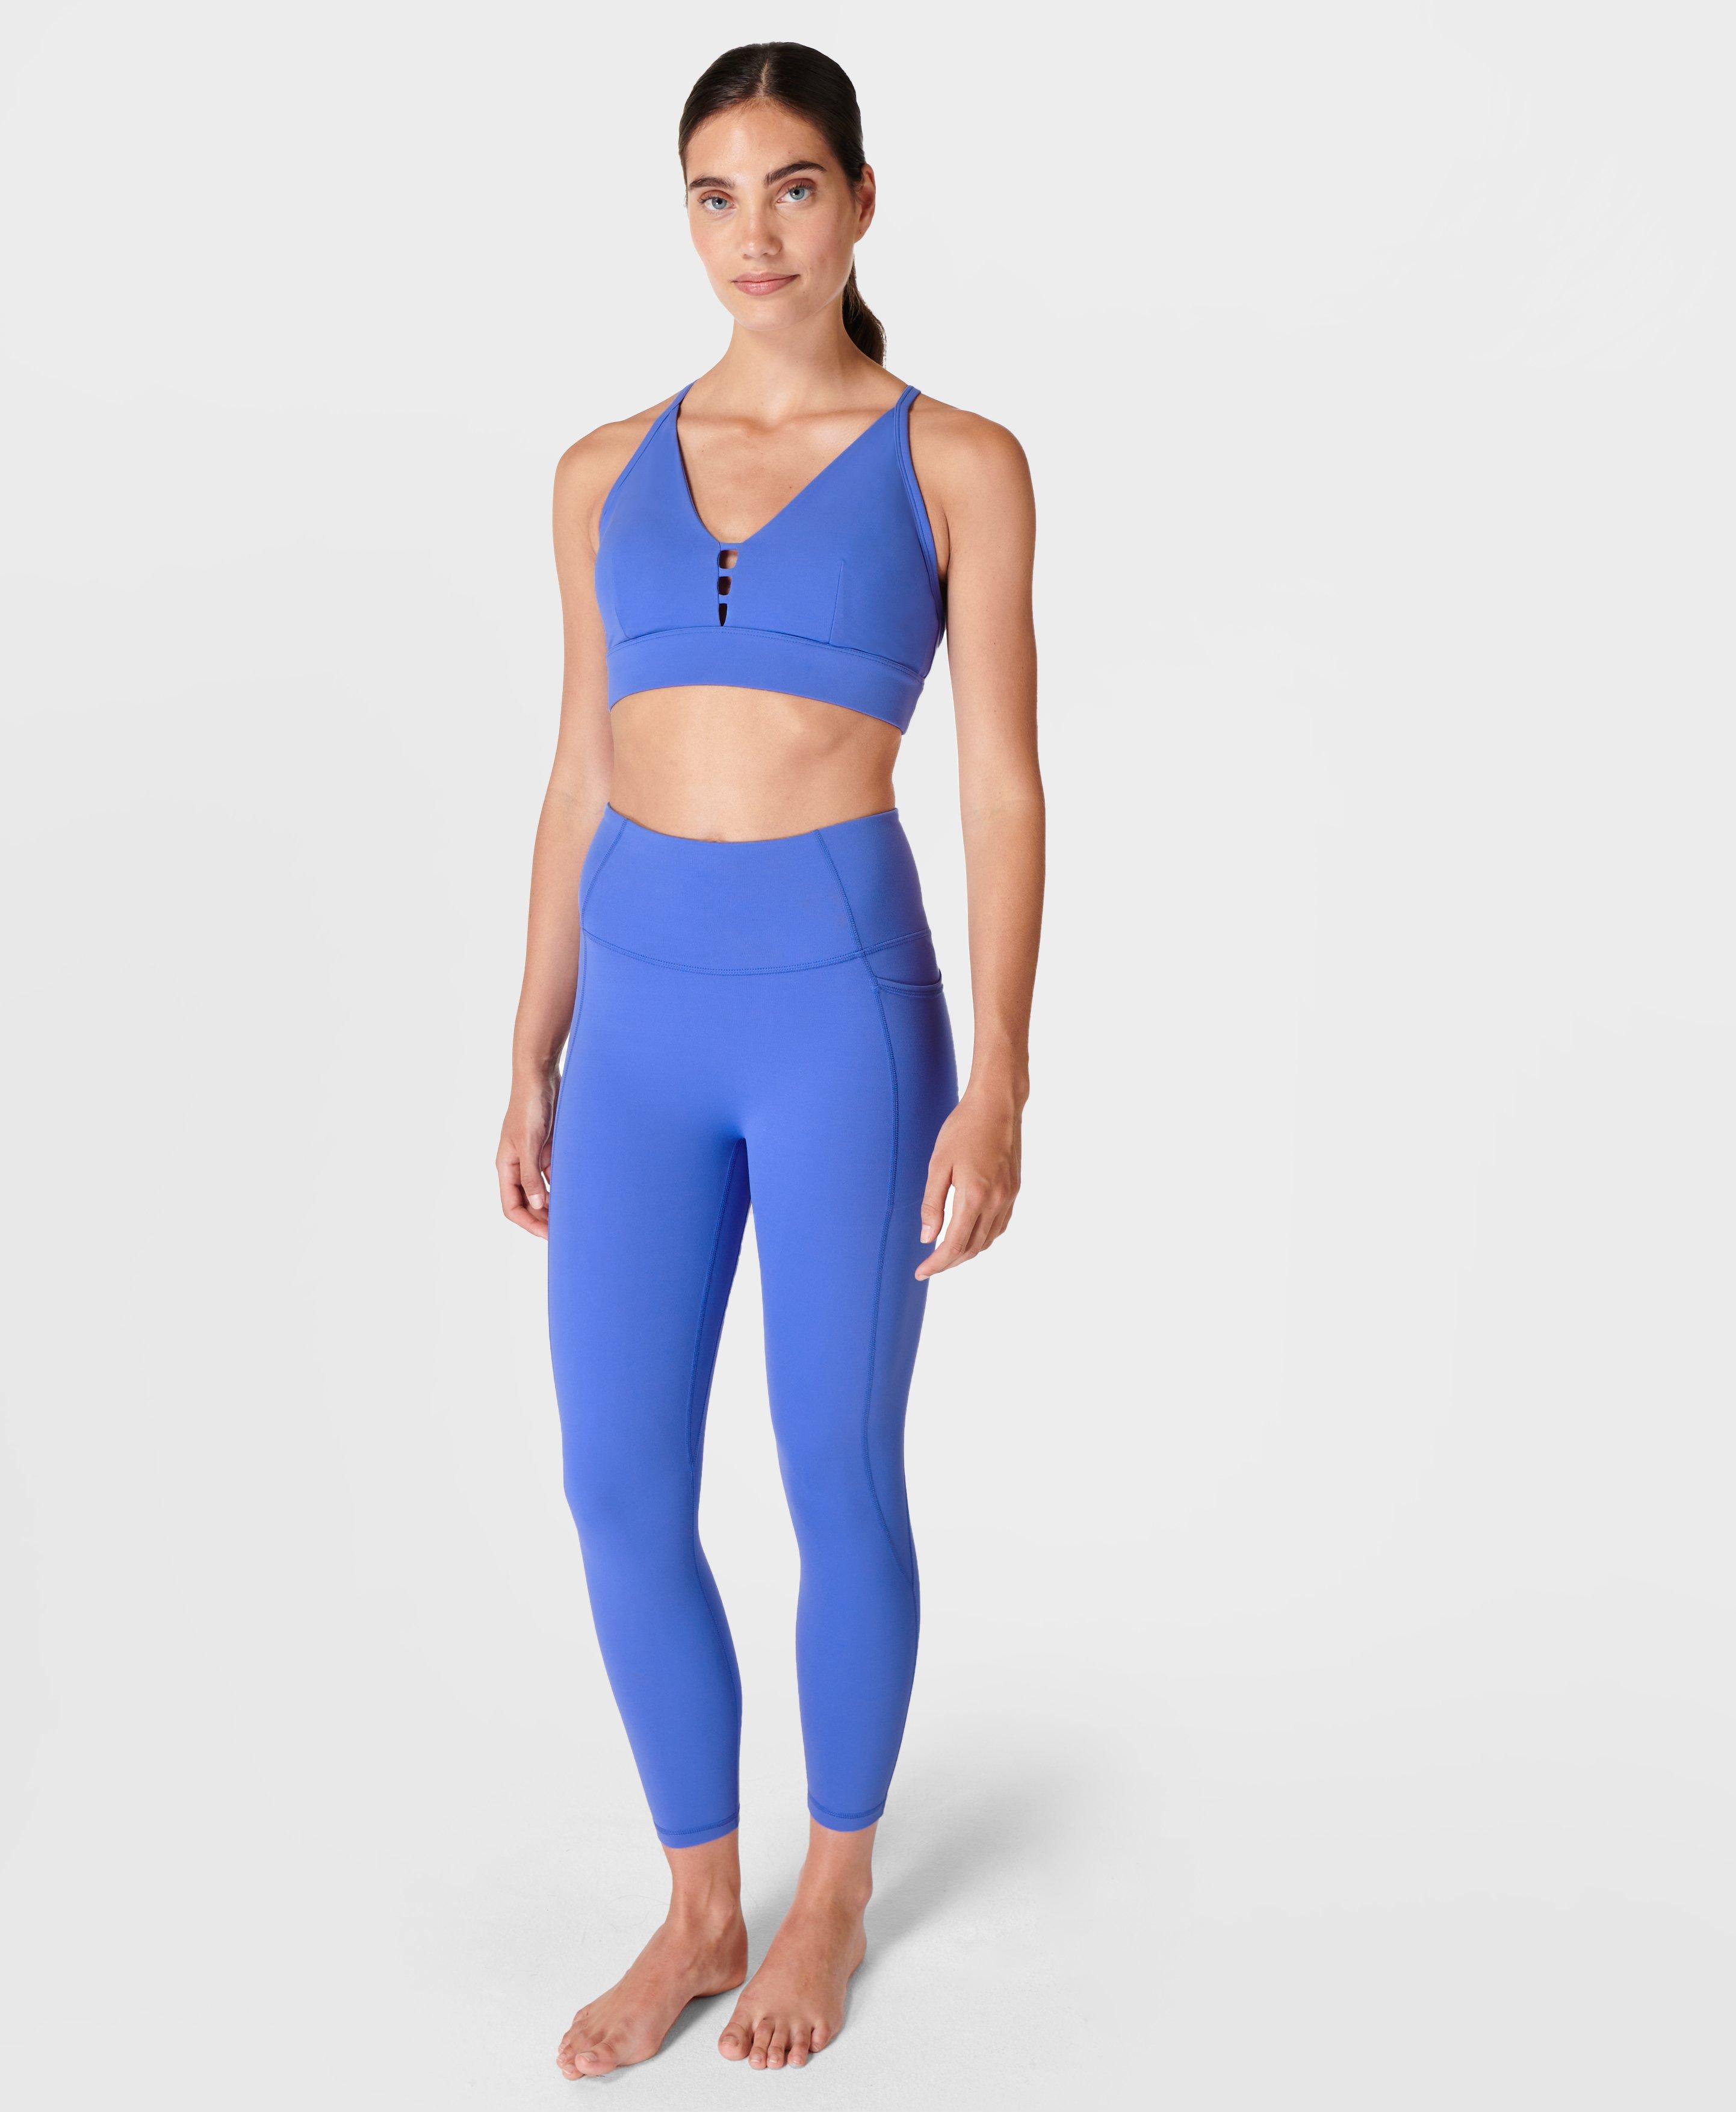 Super Soft Strappy Back Bra Color Theory - Calm Blue, Women's Sports Bras